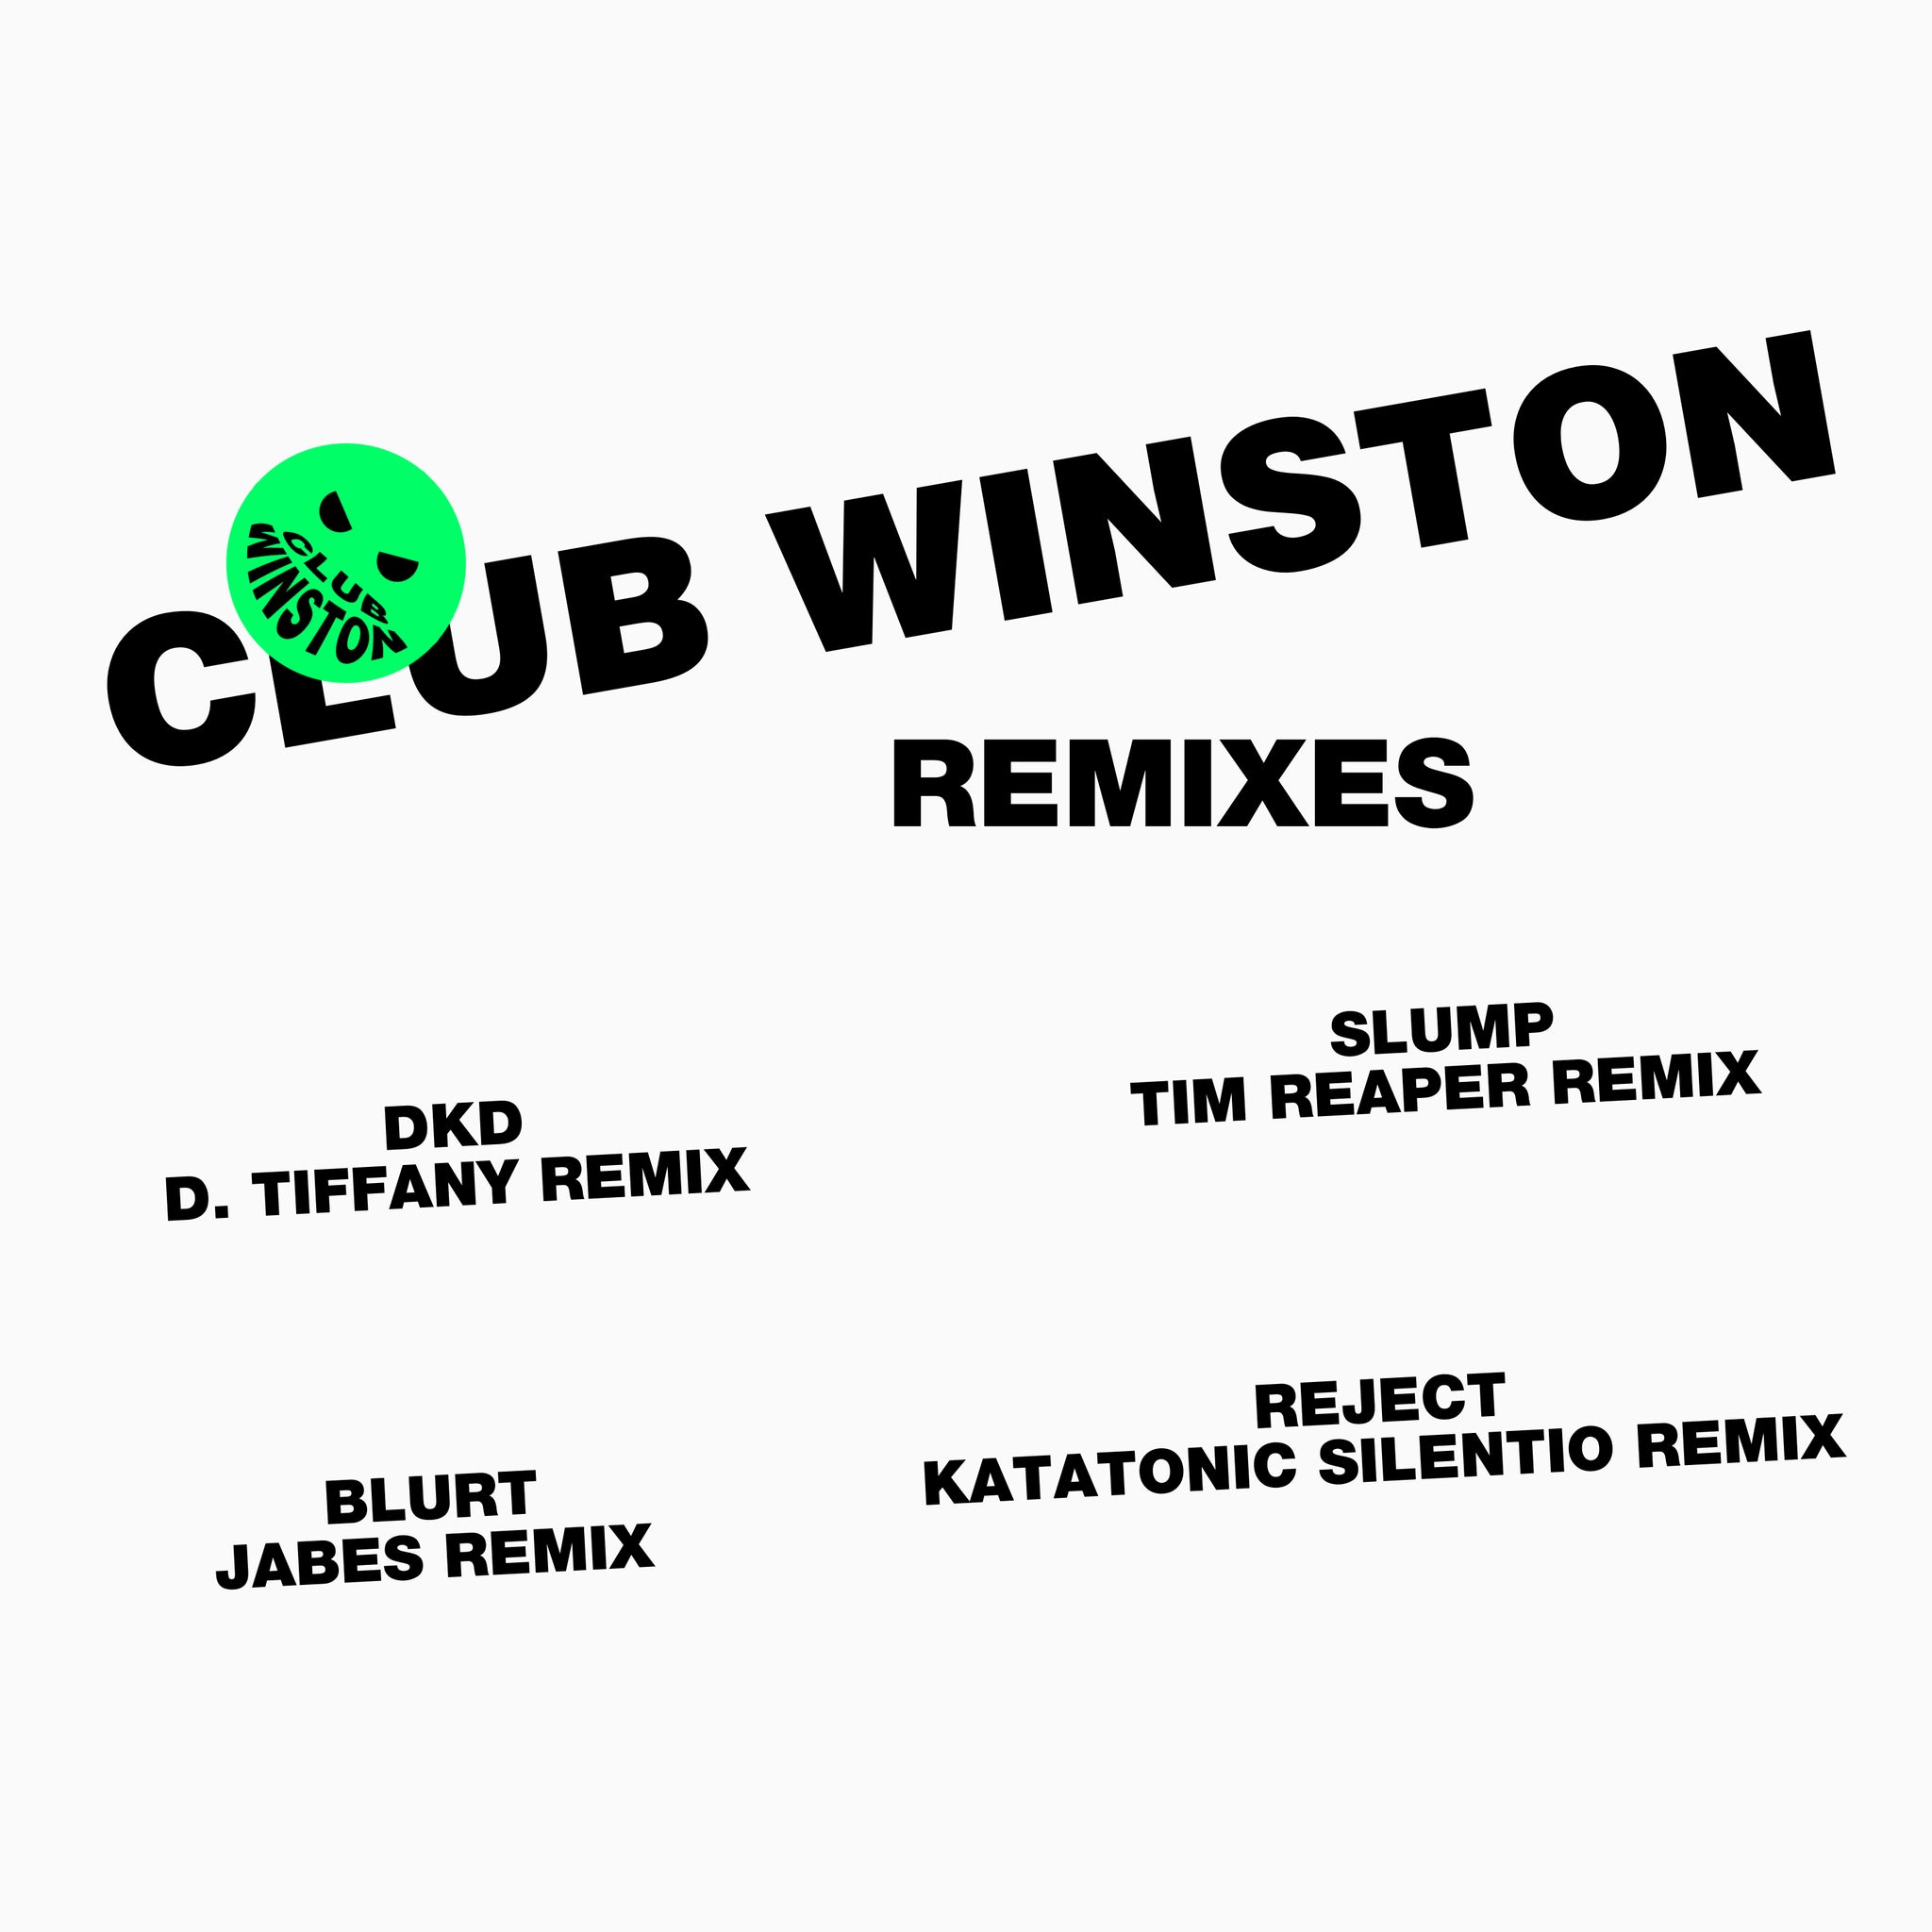 CLUB WINSTON 'THE REMIXES - FT TIM REAPER / KATATONIC SILENTIO / MORE' 12"